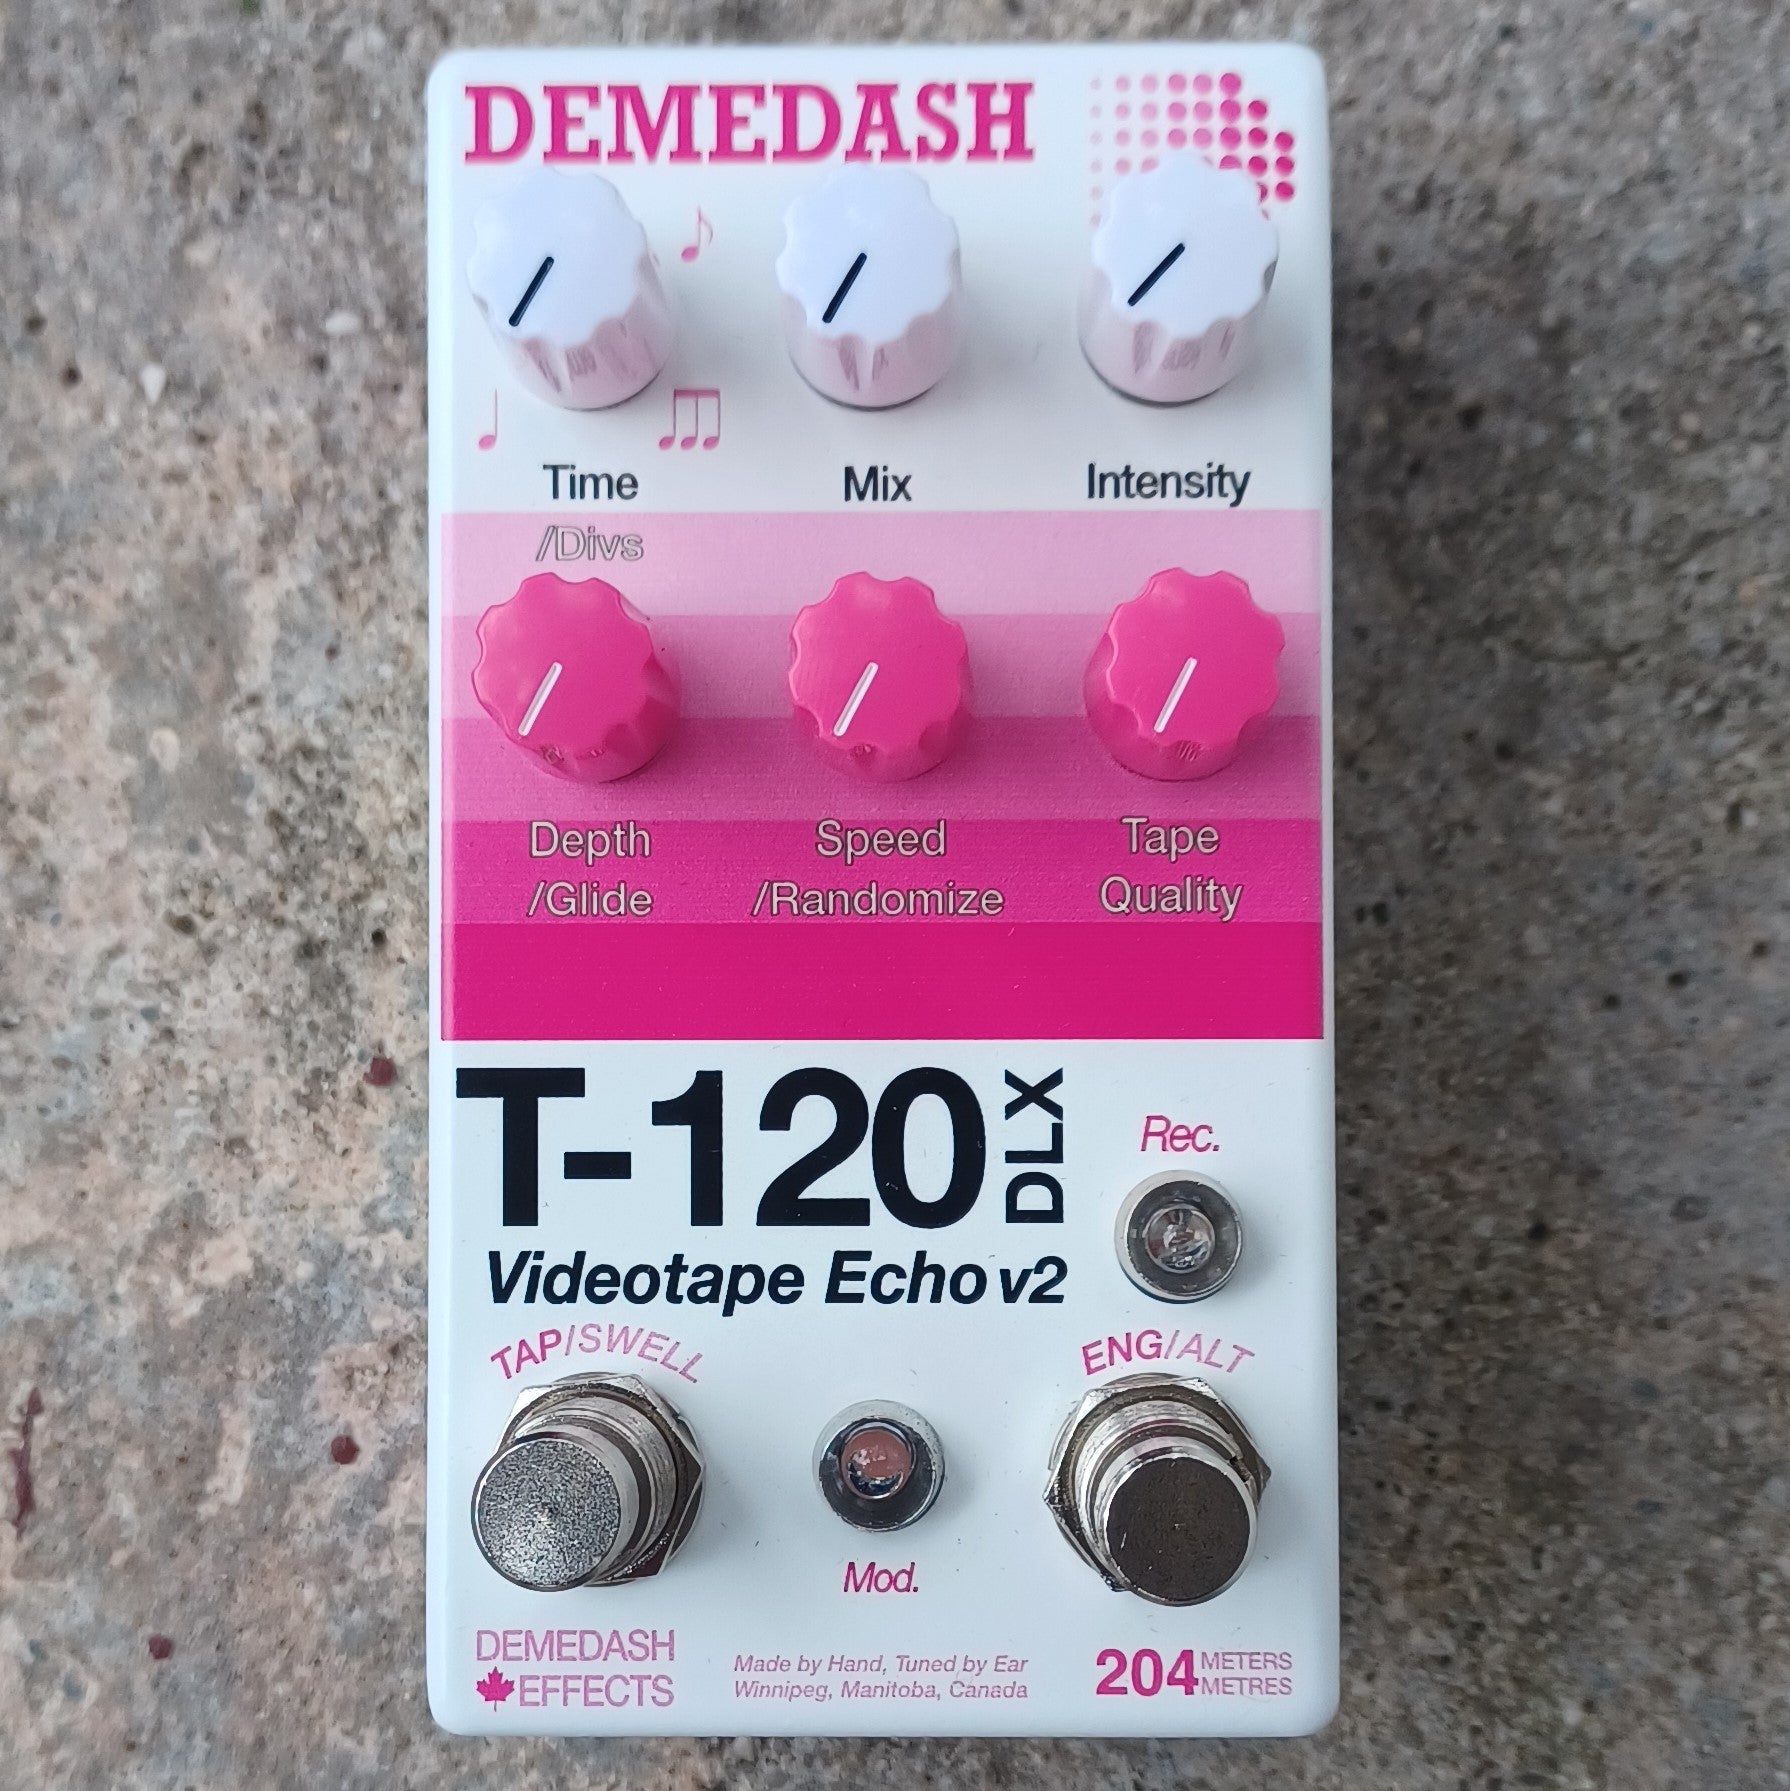 Demedash Effects Pink Videotape Echo Deluxe V2 